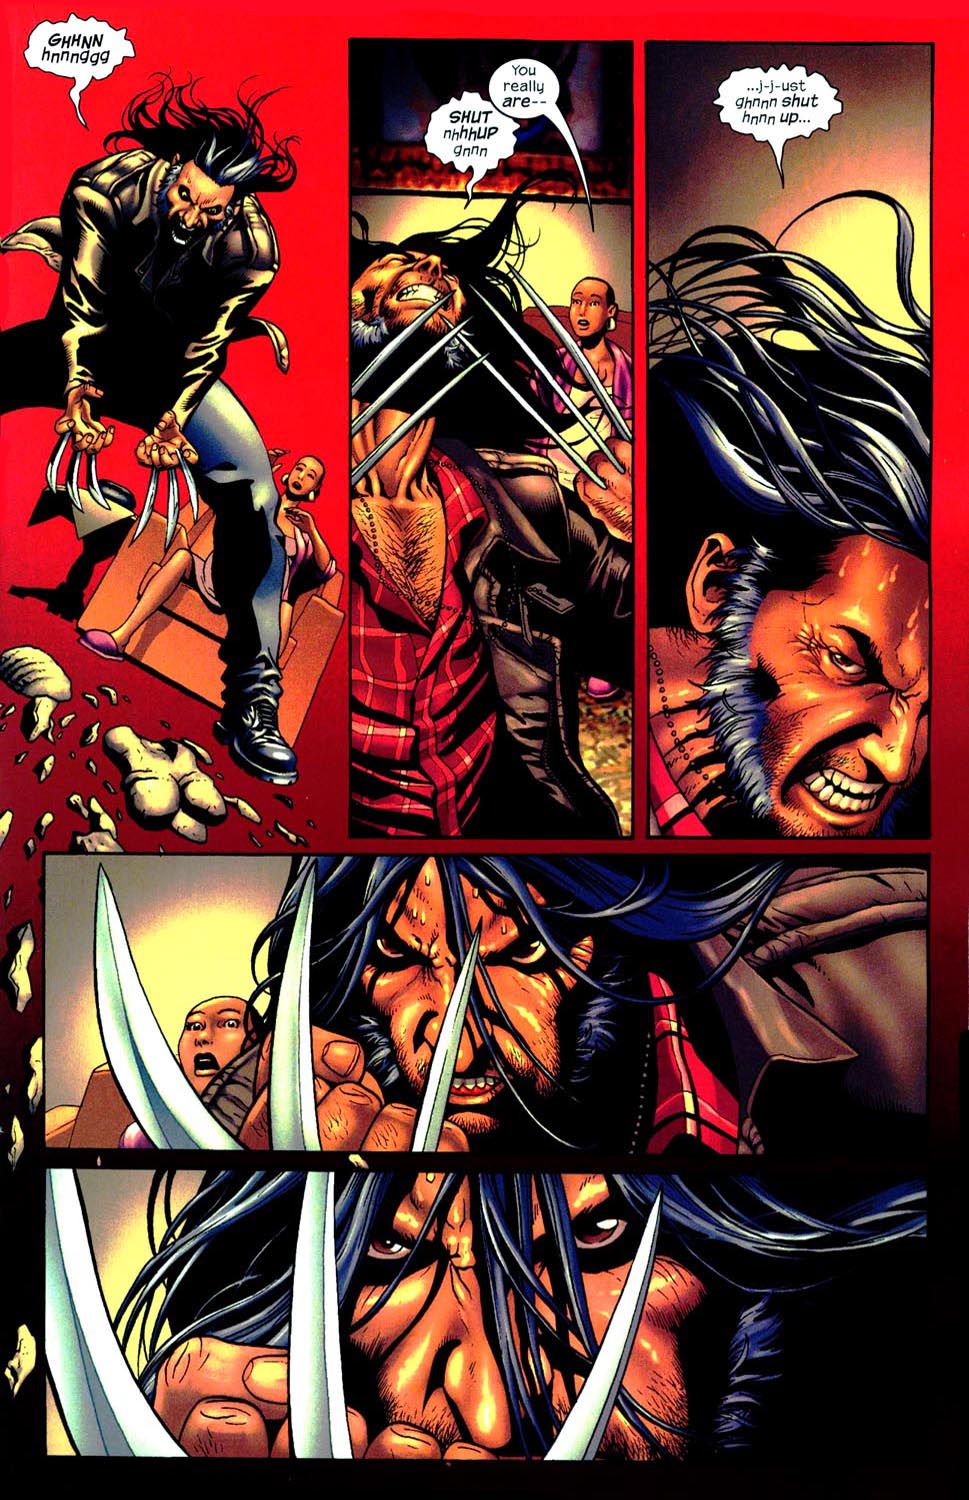 Wolverine: Coyote Crossing- Vol. 4